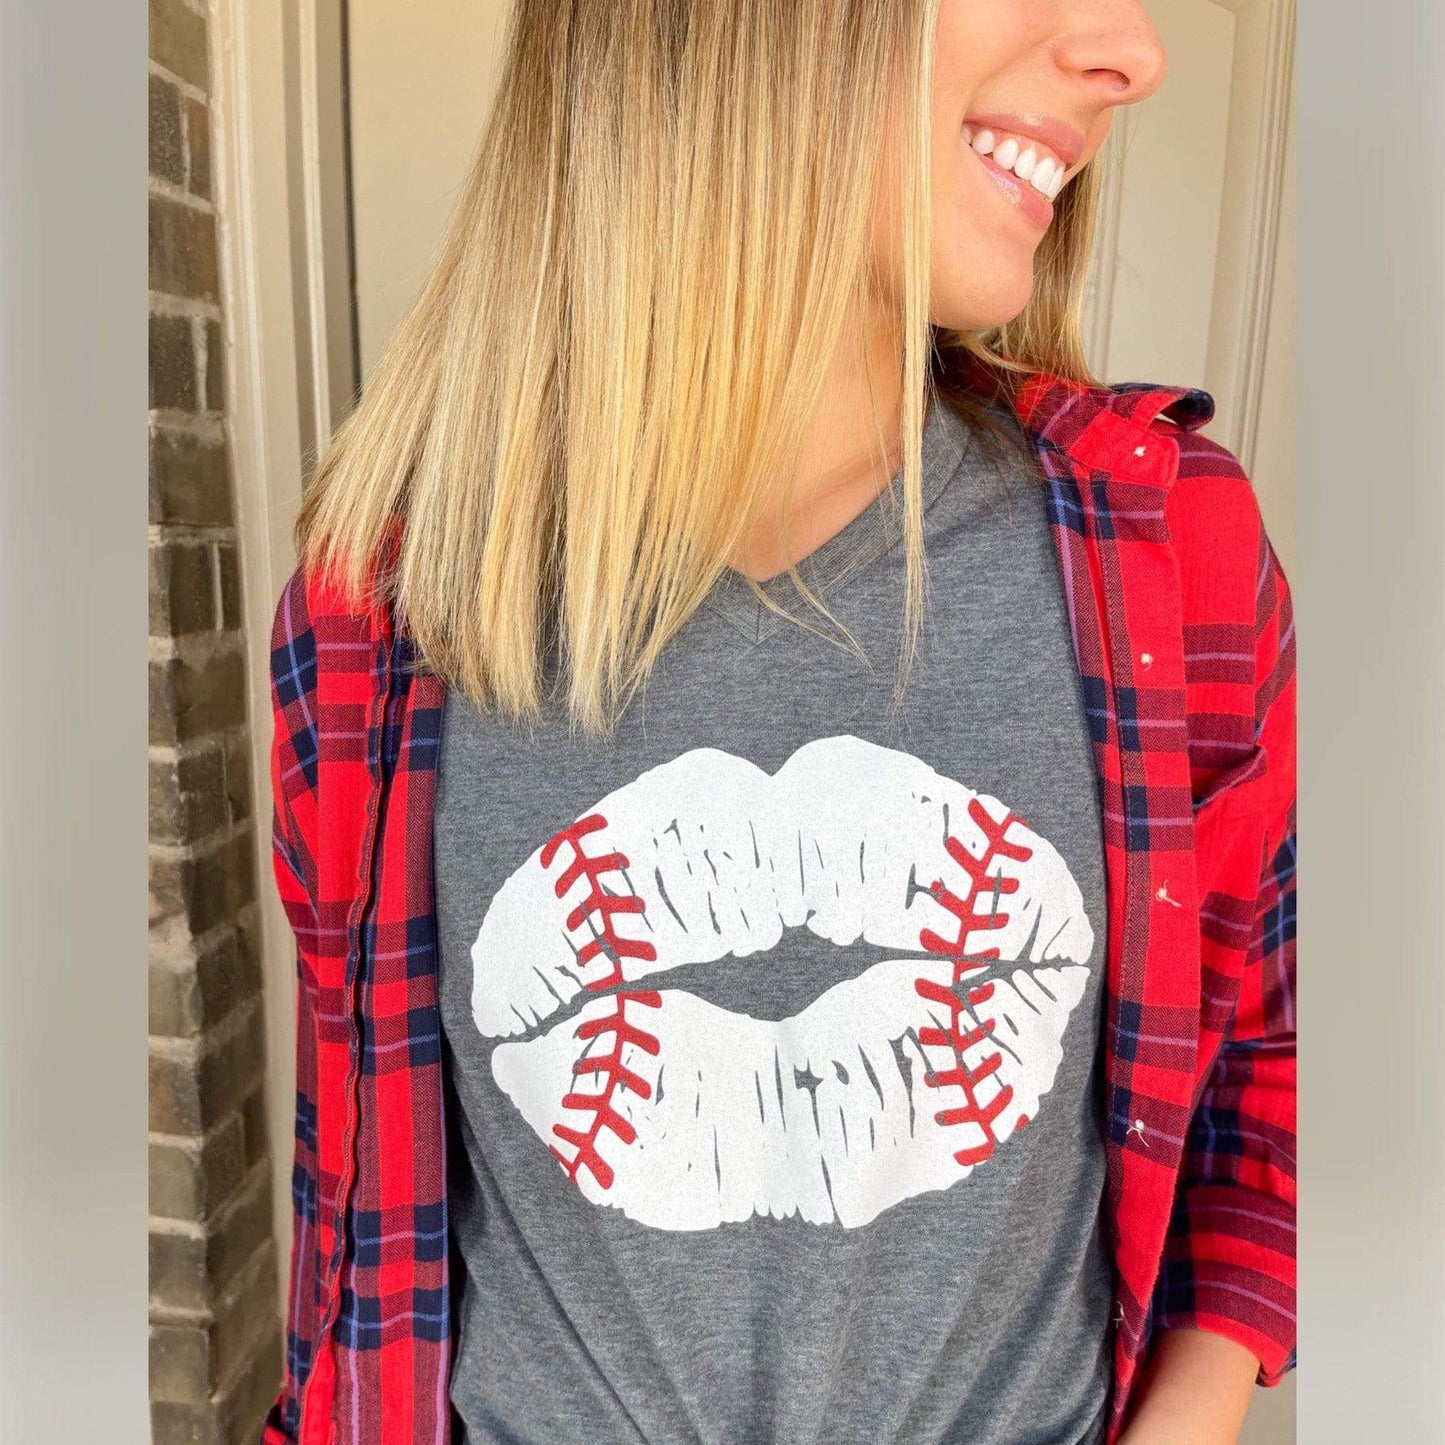 Envy Stylz Boutique Women - Apparel - Shirts - T-Shirts Baseball Lips Soft Graphic Tee